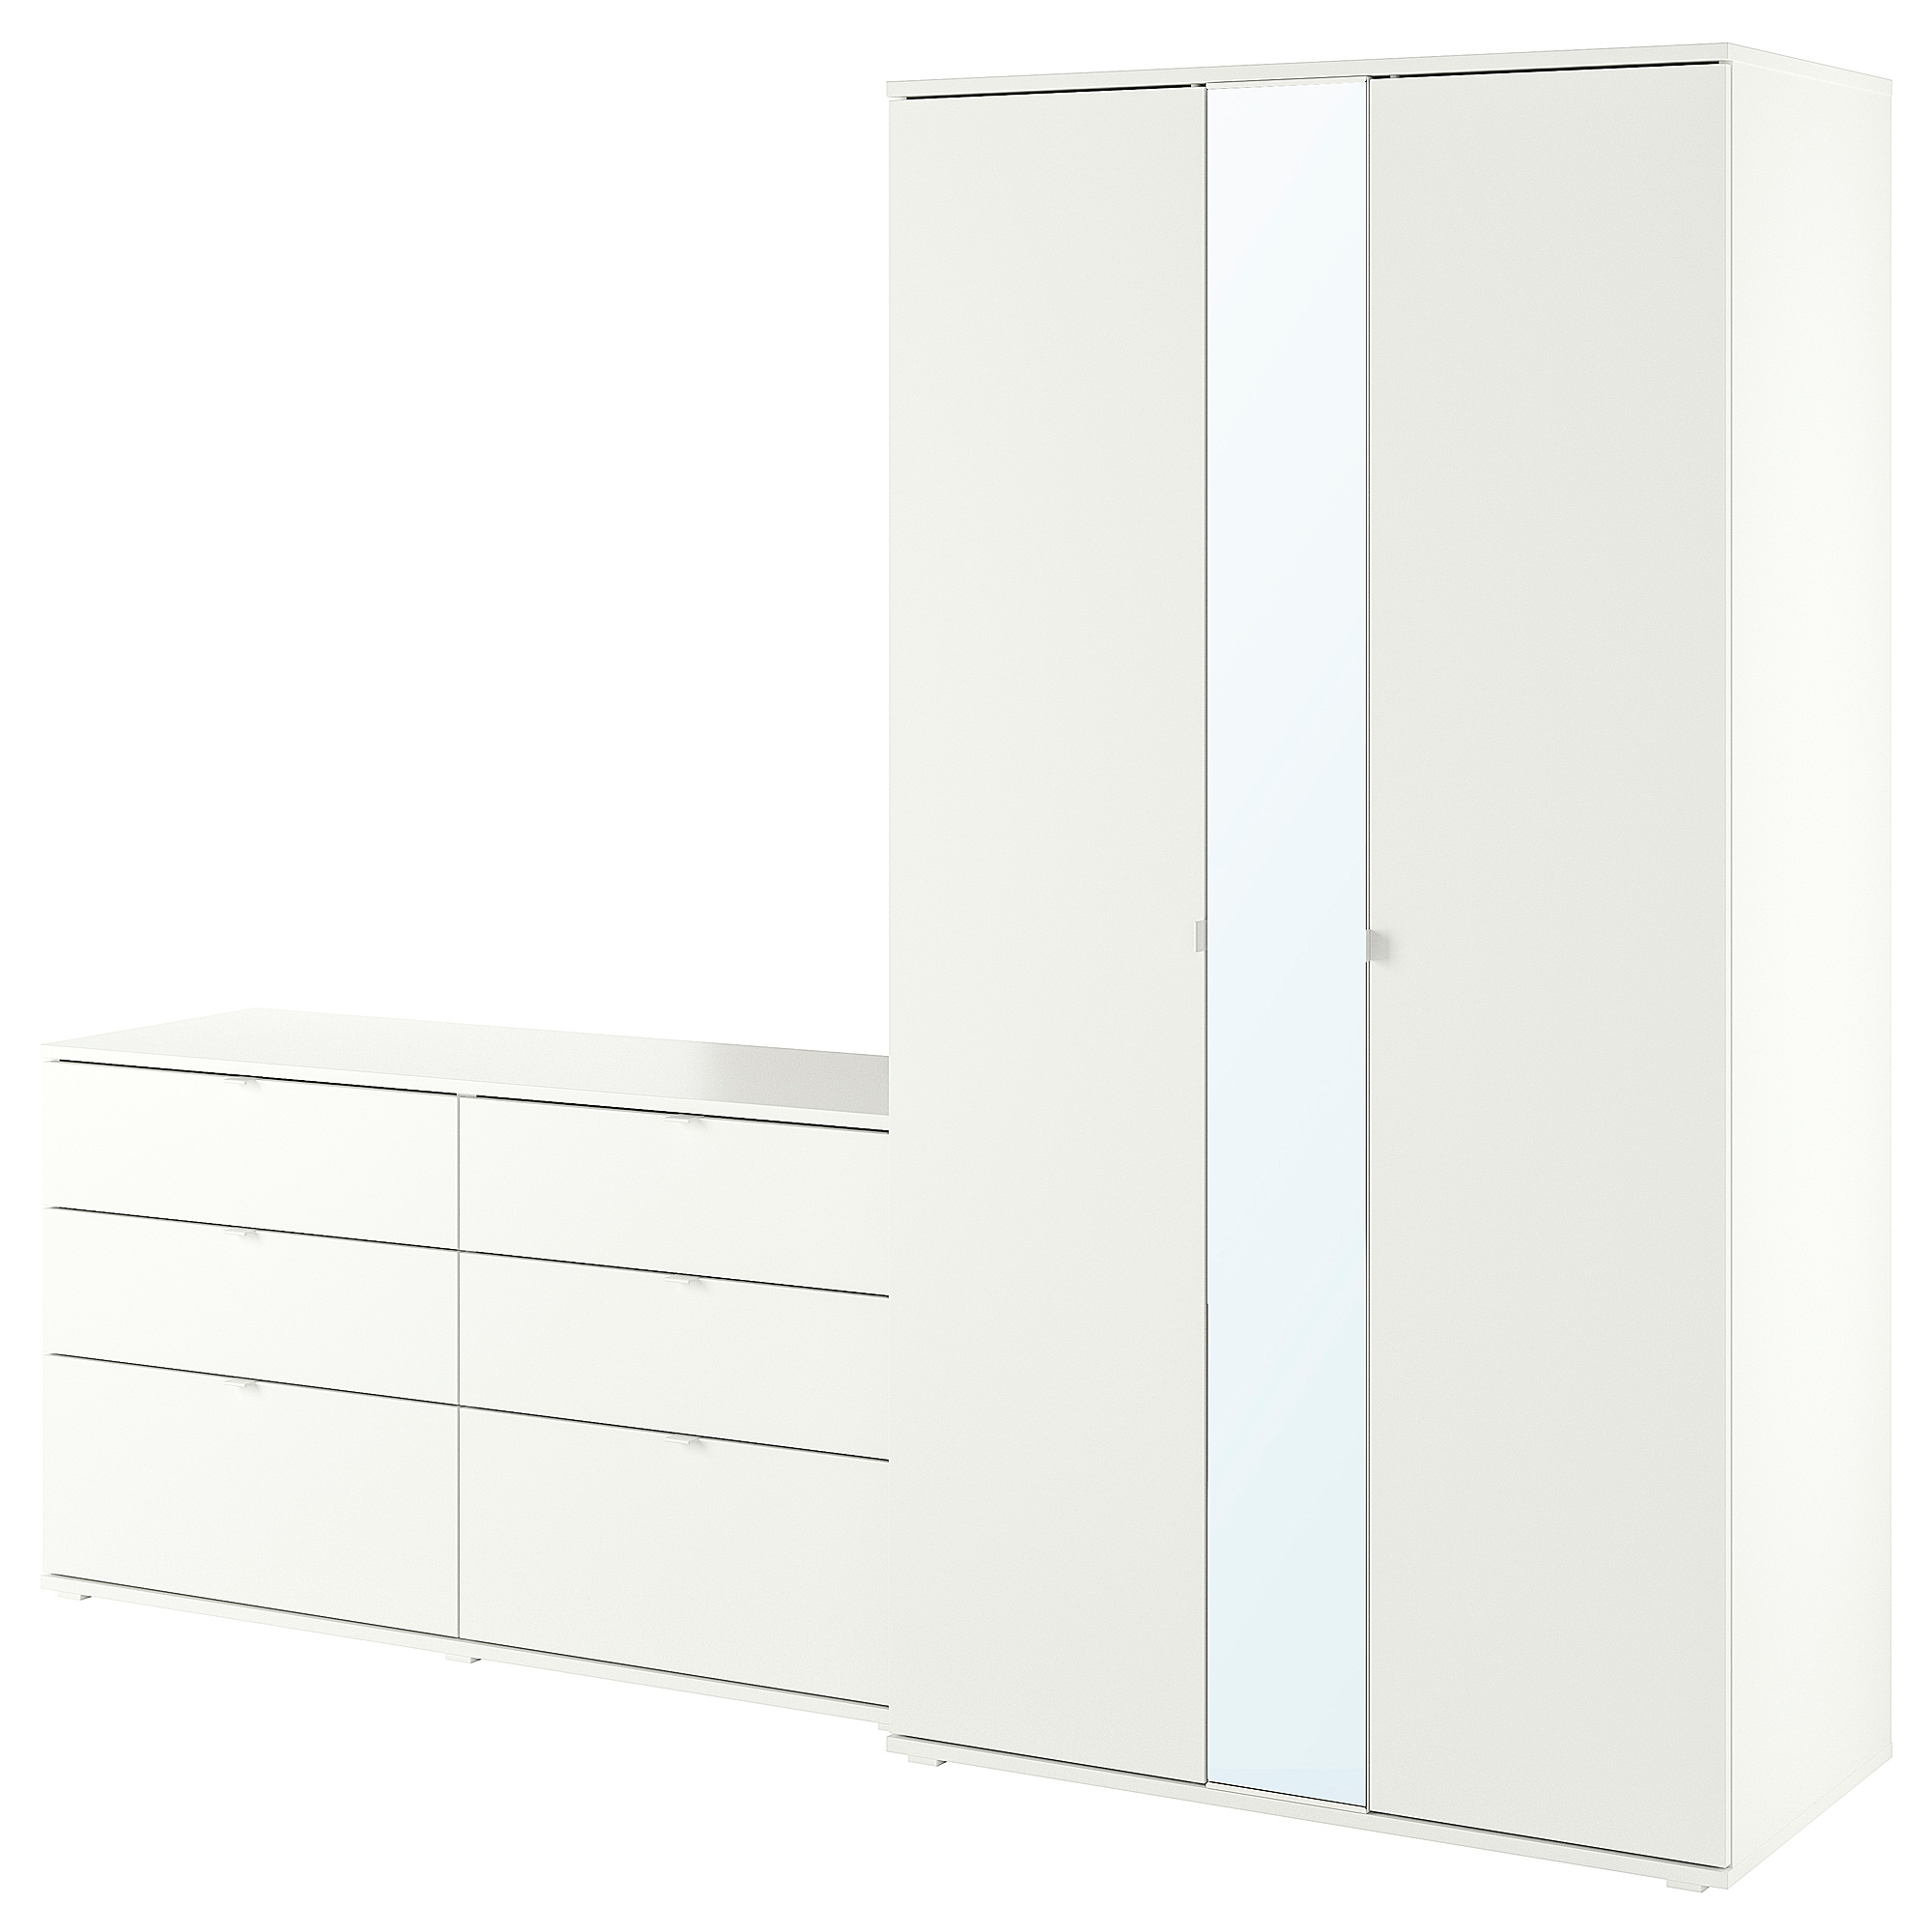 VILHATTEN wardrobe with 2 doors and 2 drawers, oak effect - IKEA